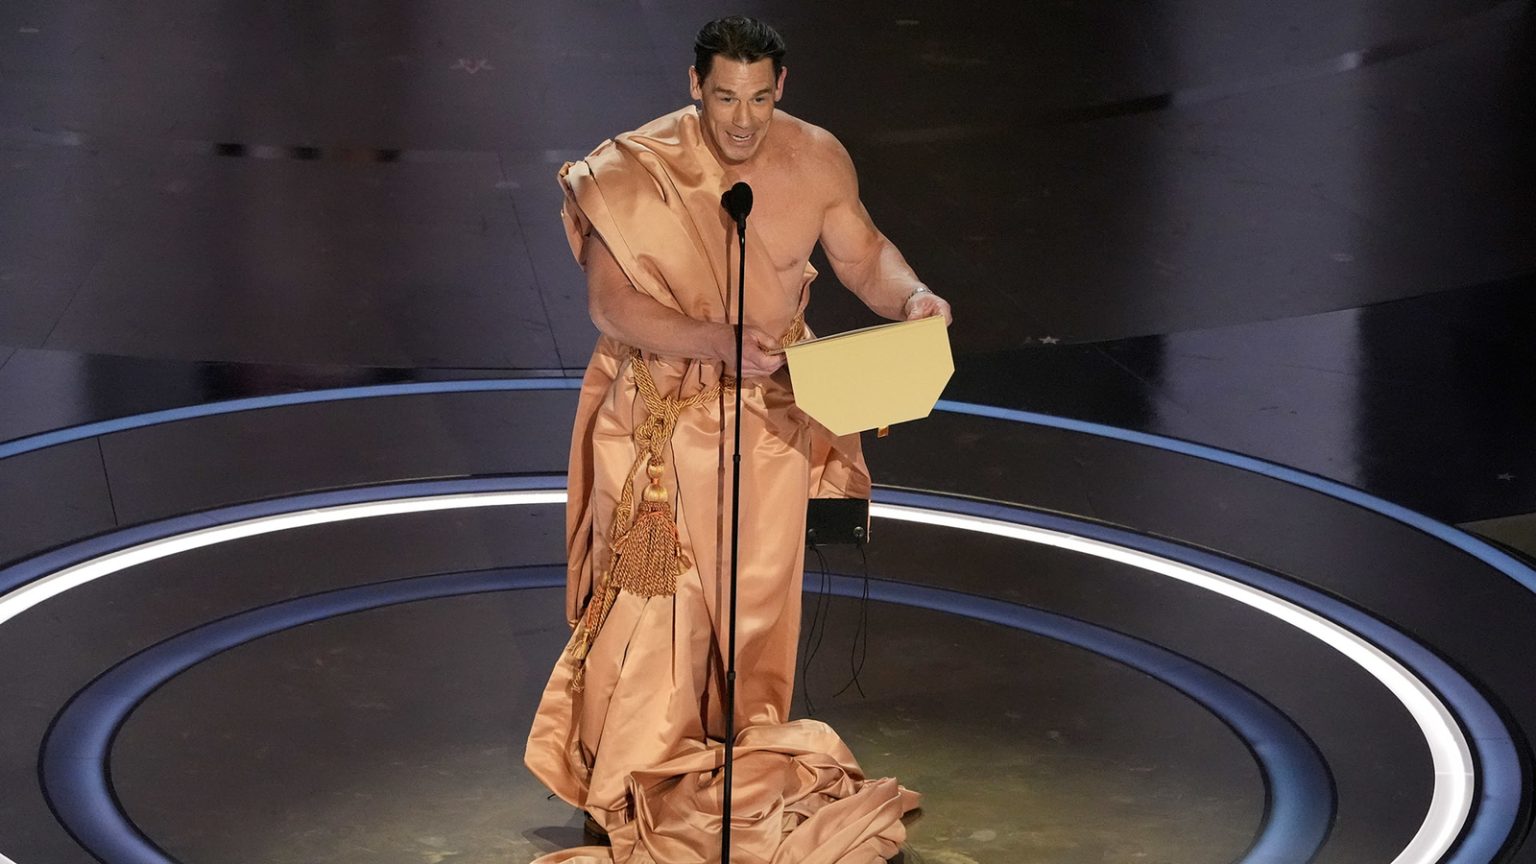 John Cena strips down on Oscars stage to announce winner of best